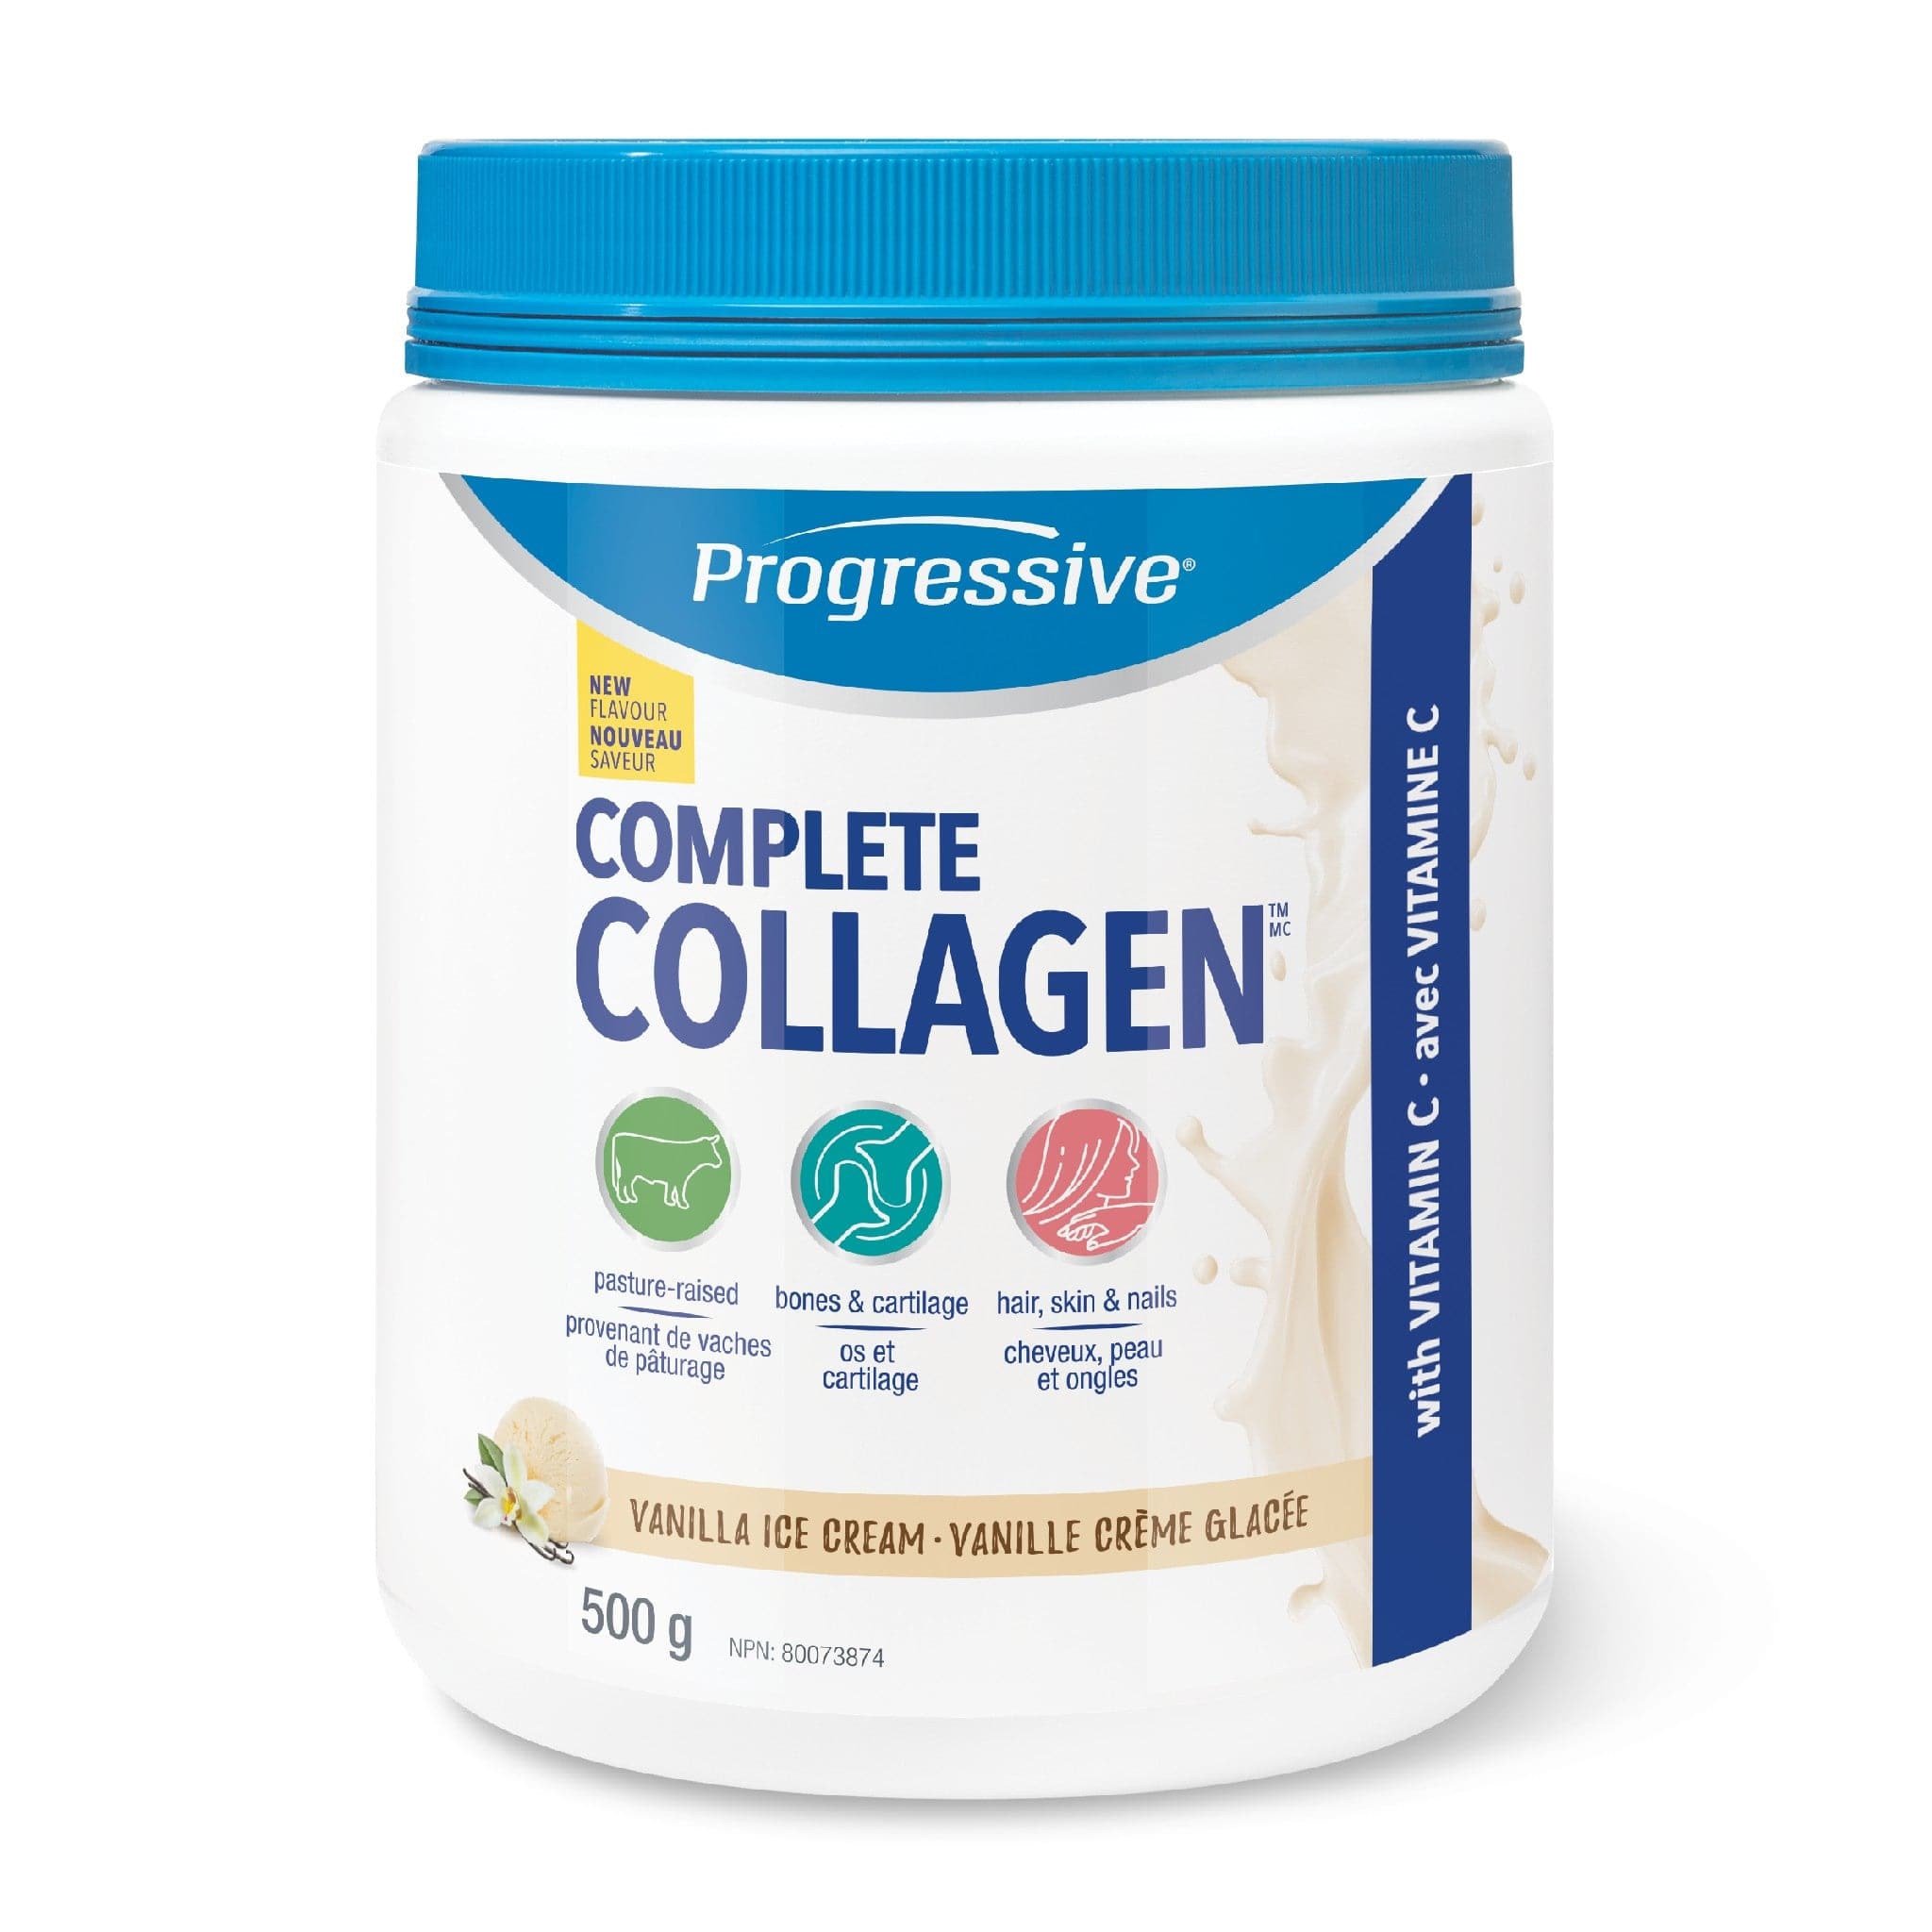 Progressive Complete Collagen 500g Vanilla Ice Cream